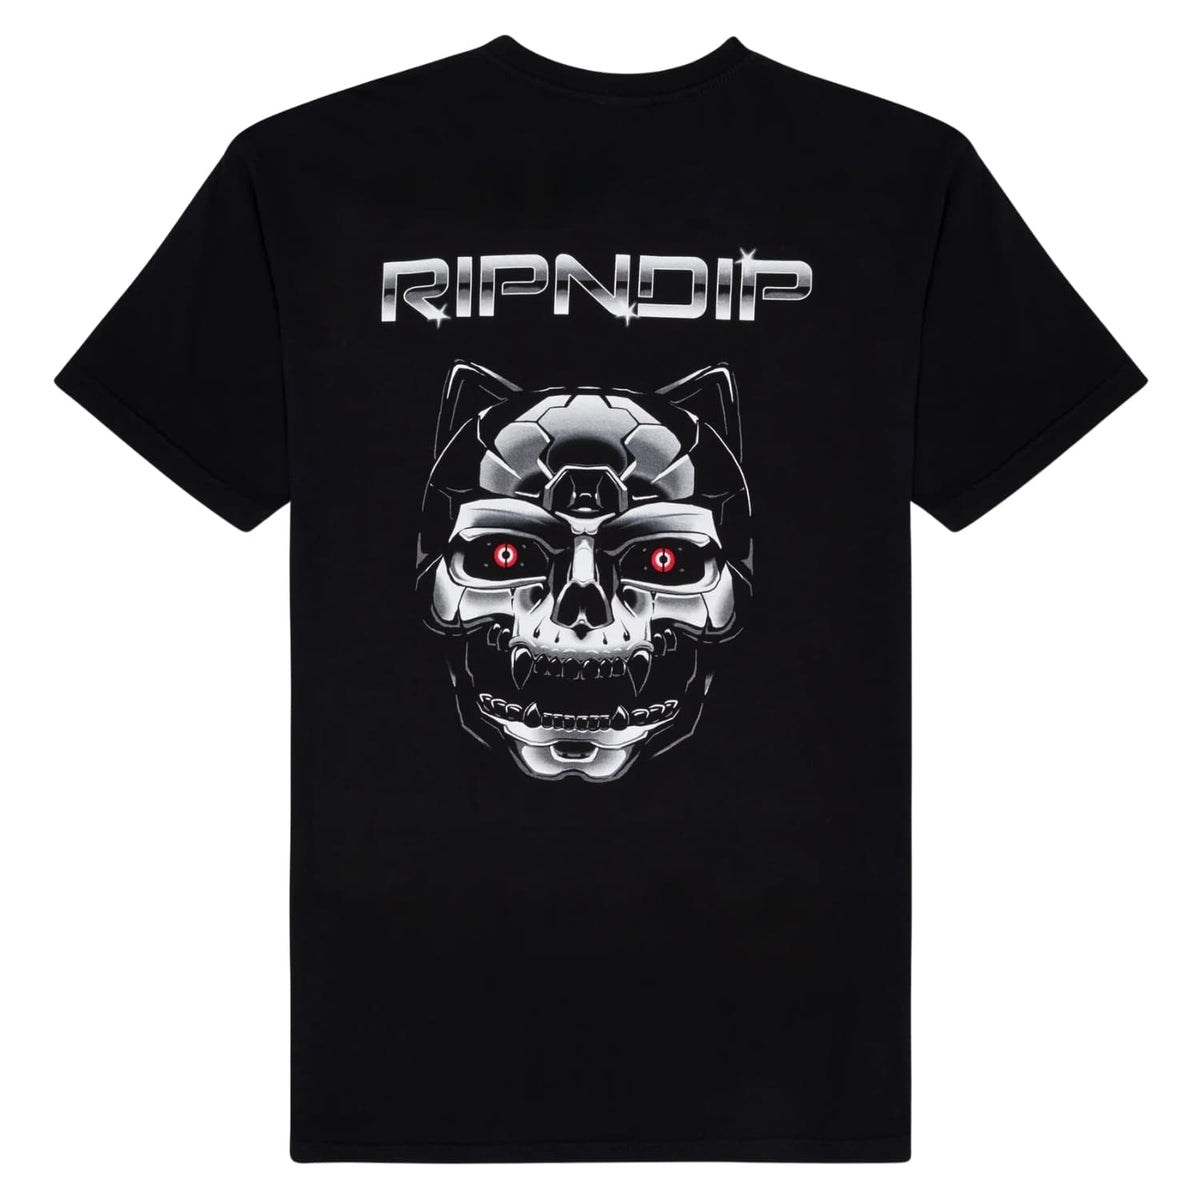 Ripndip Nerminator 2.0 T-Shirt - Black - Mens Graphic T-Shirt by RIPNDIP